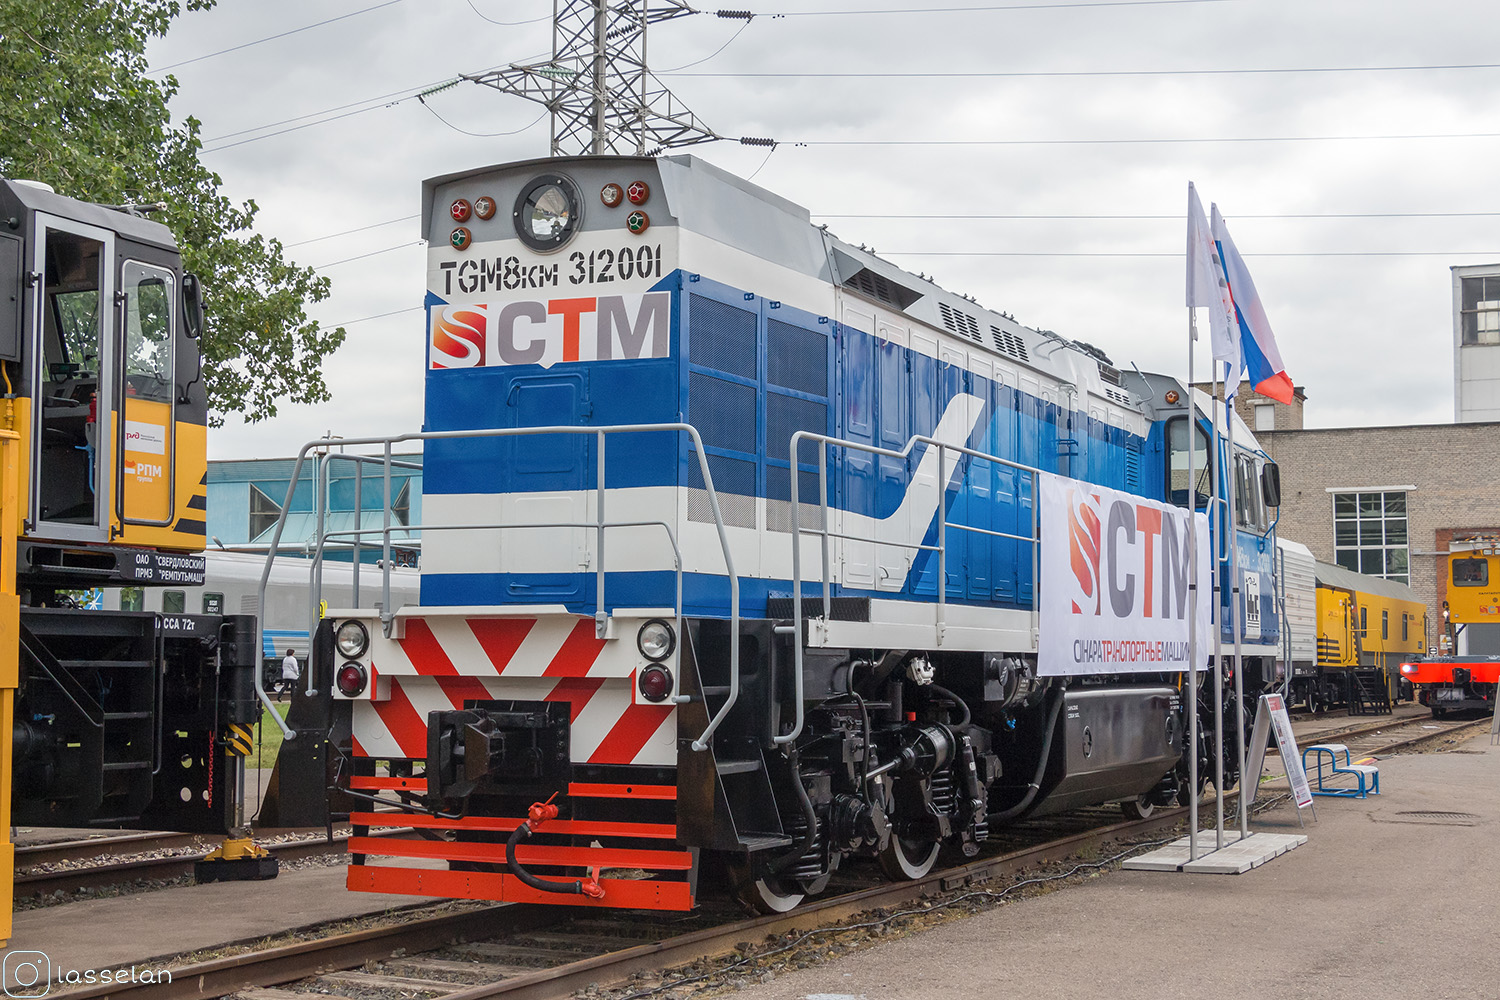 TGM8KM-312001; Moscow Railway — The 6th International Rail Salon EXPO 1520